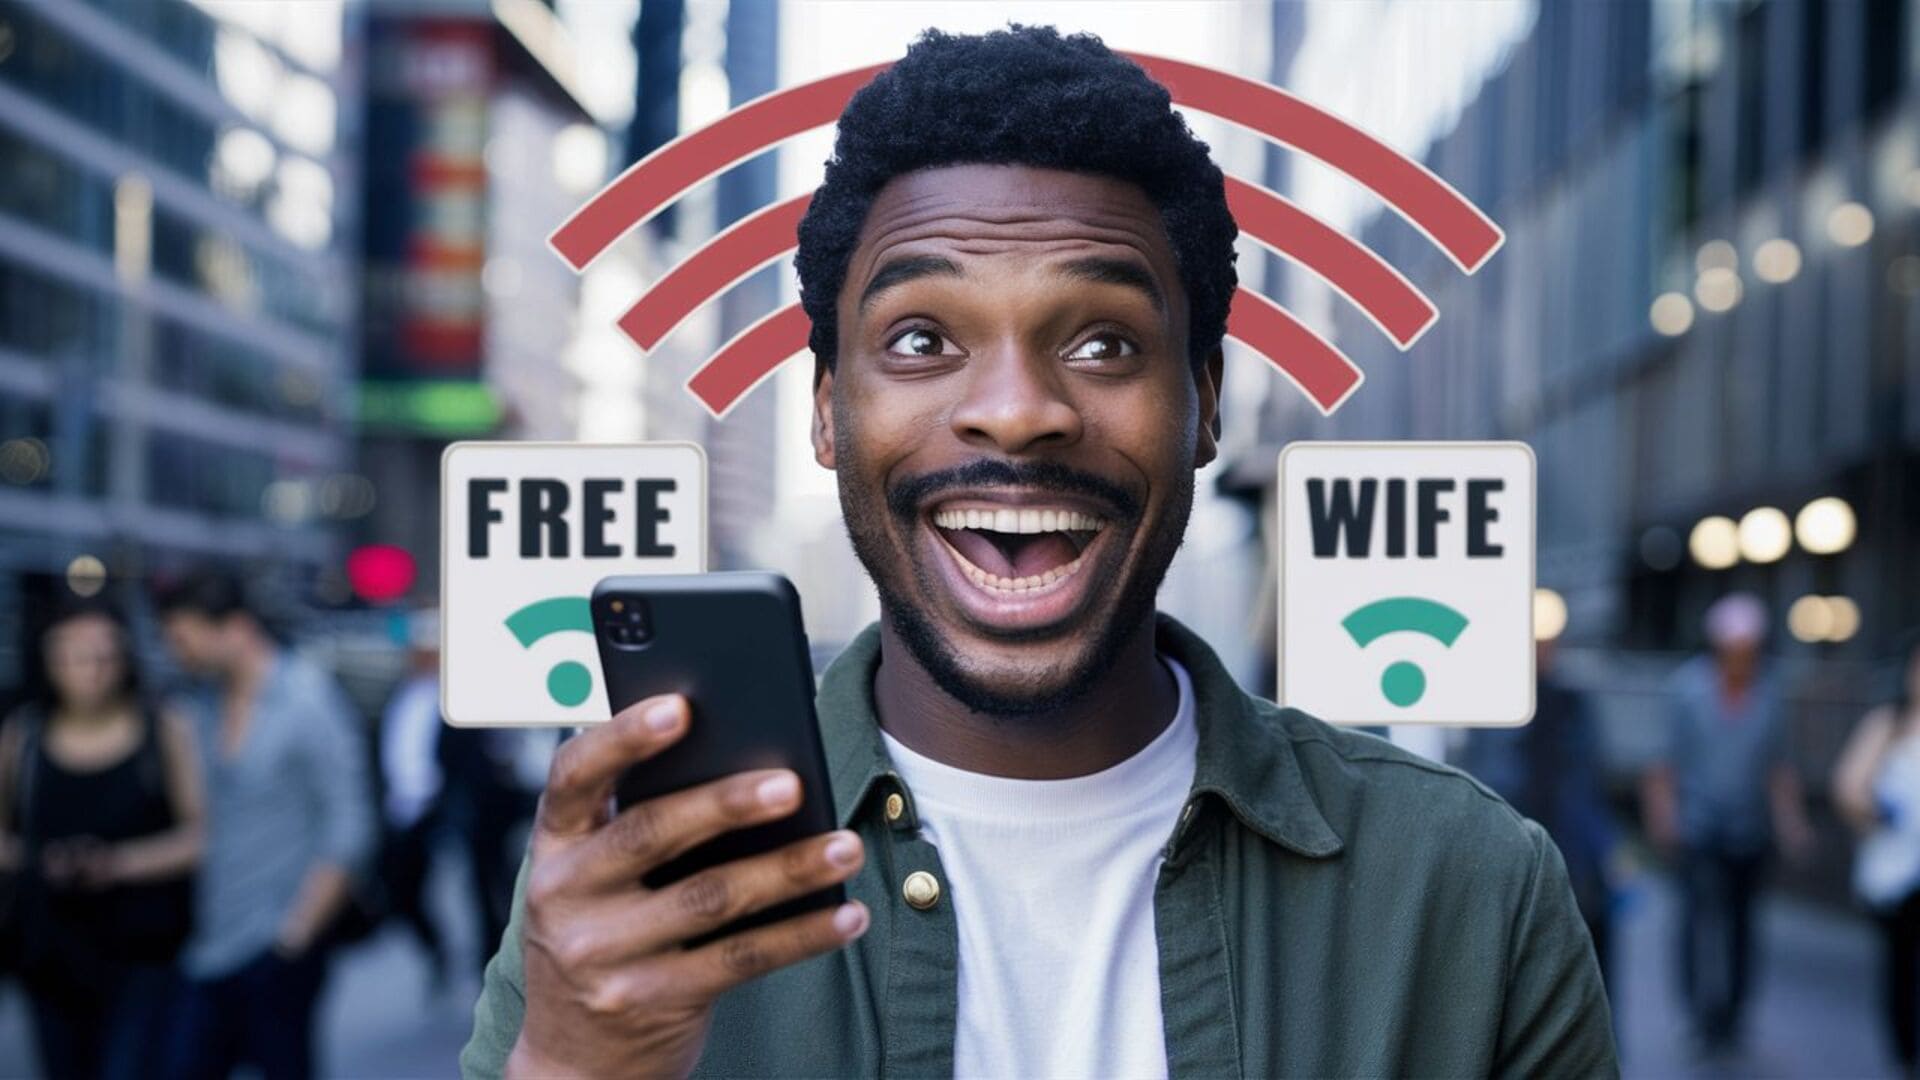 Free wifi; WiFi Hack Possible Or Not